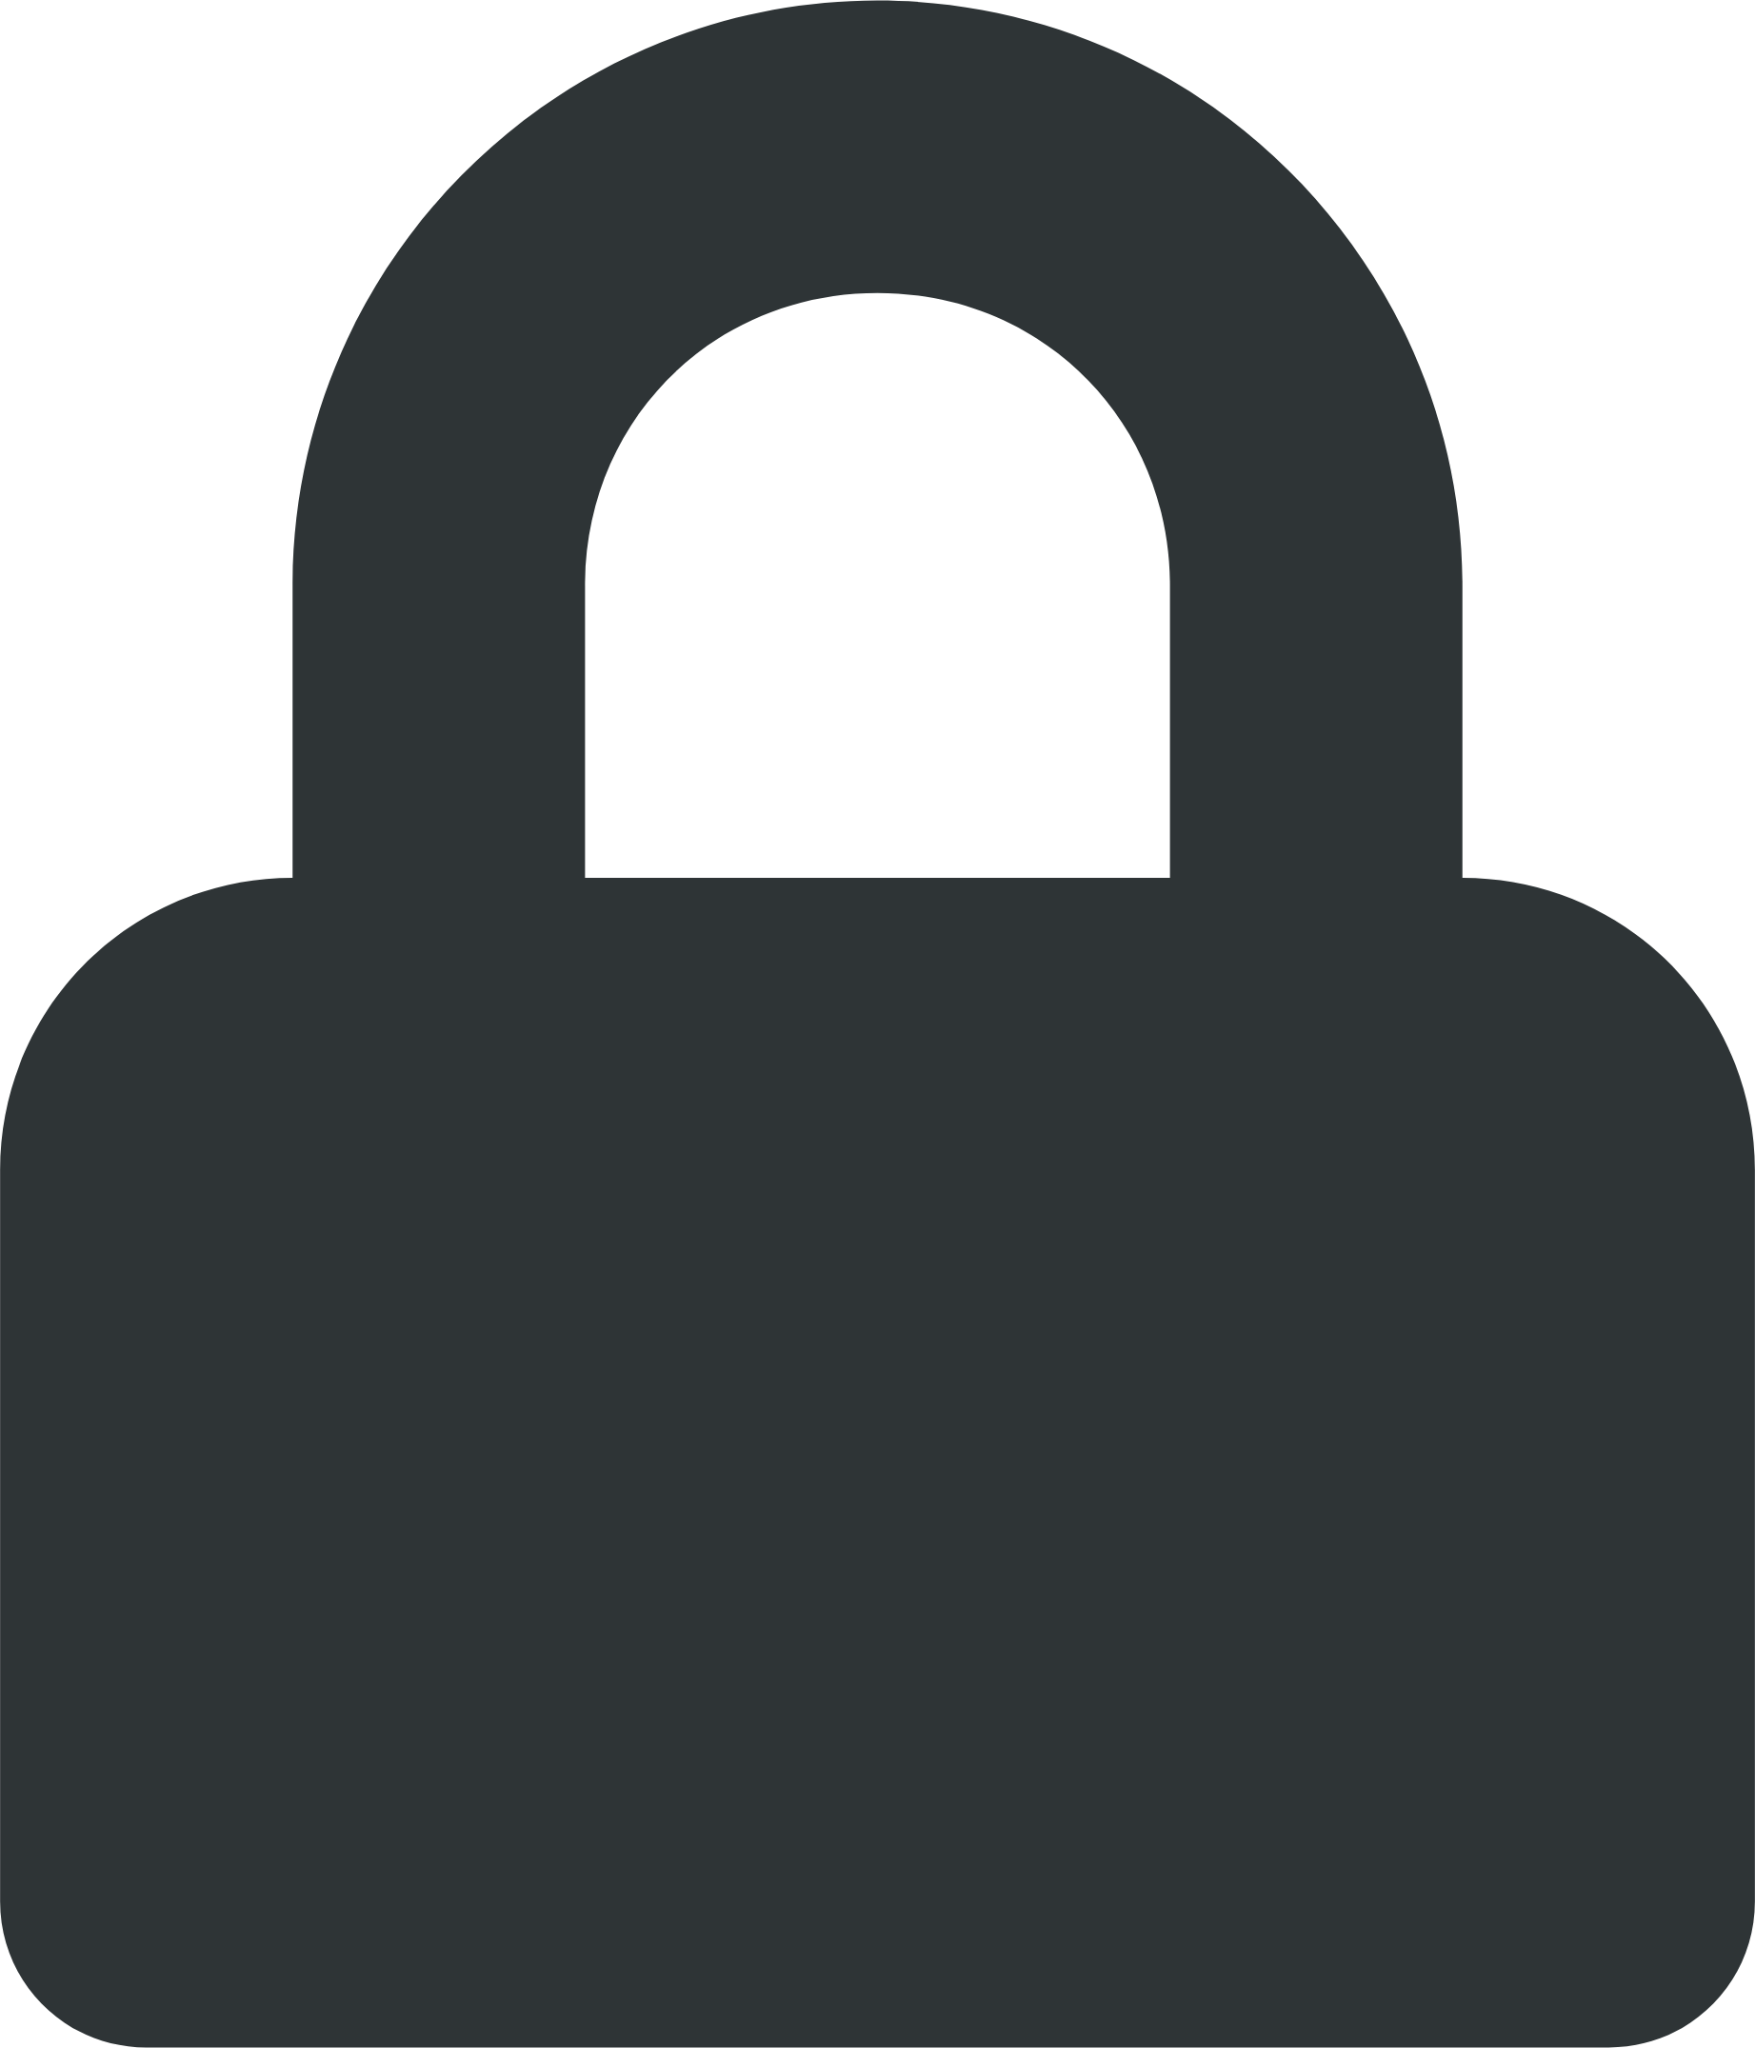 system lock screen symbolic icon